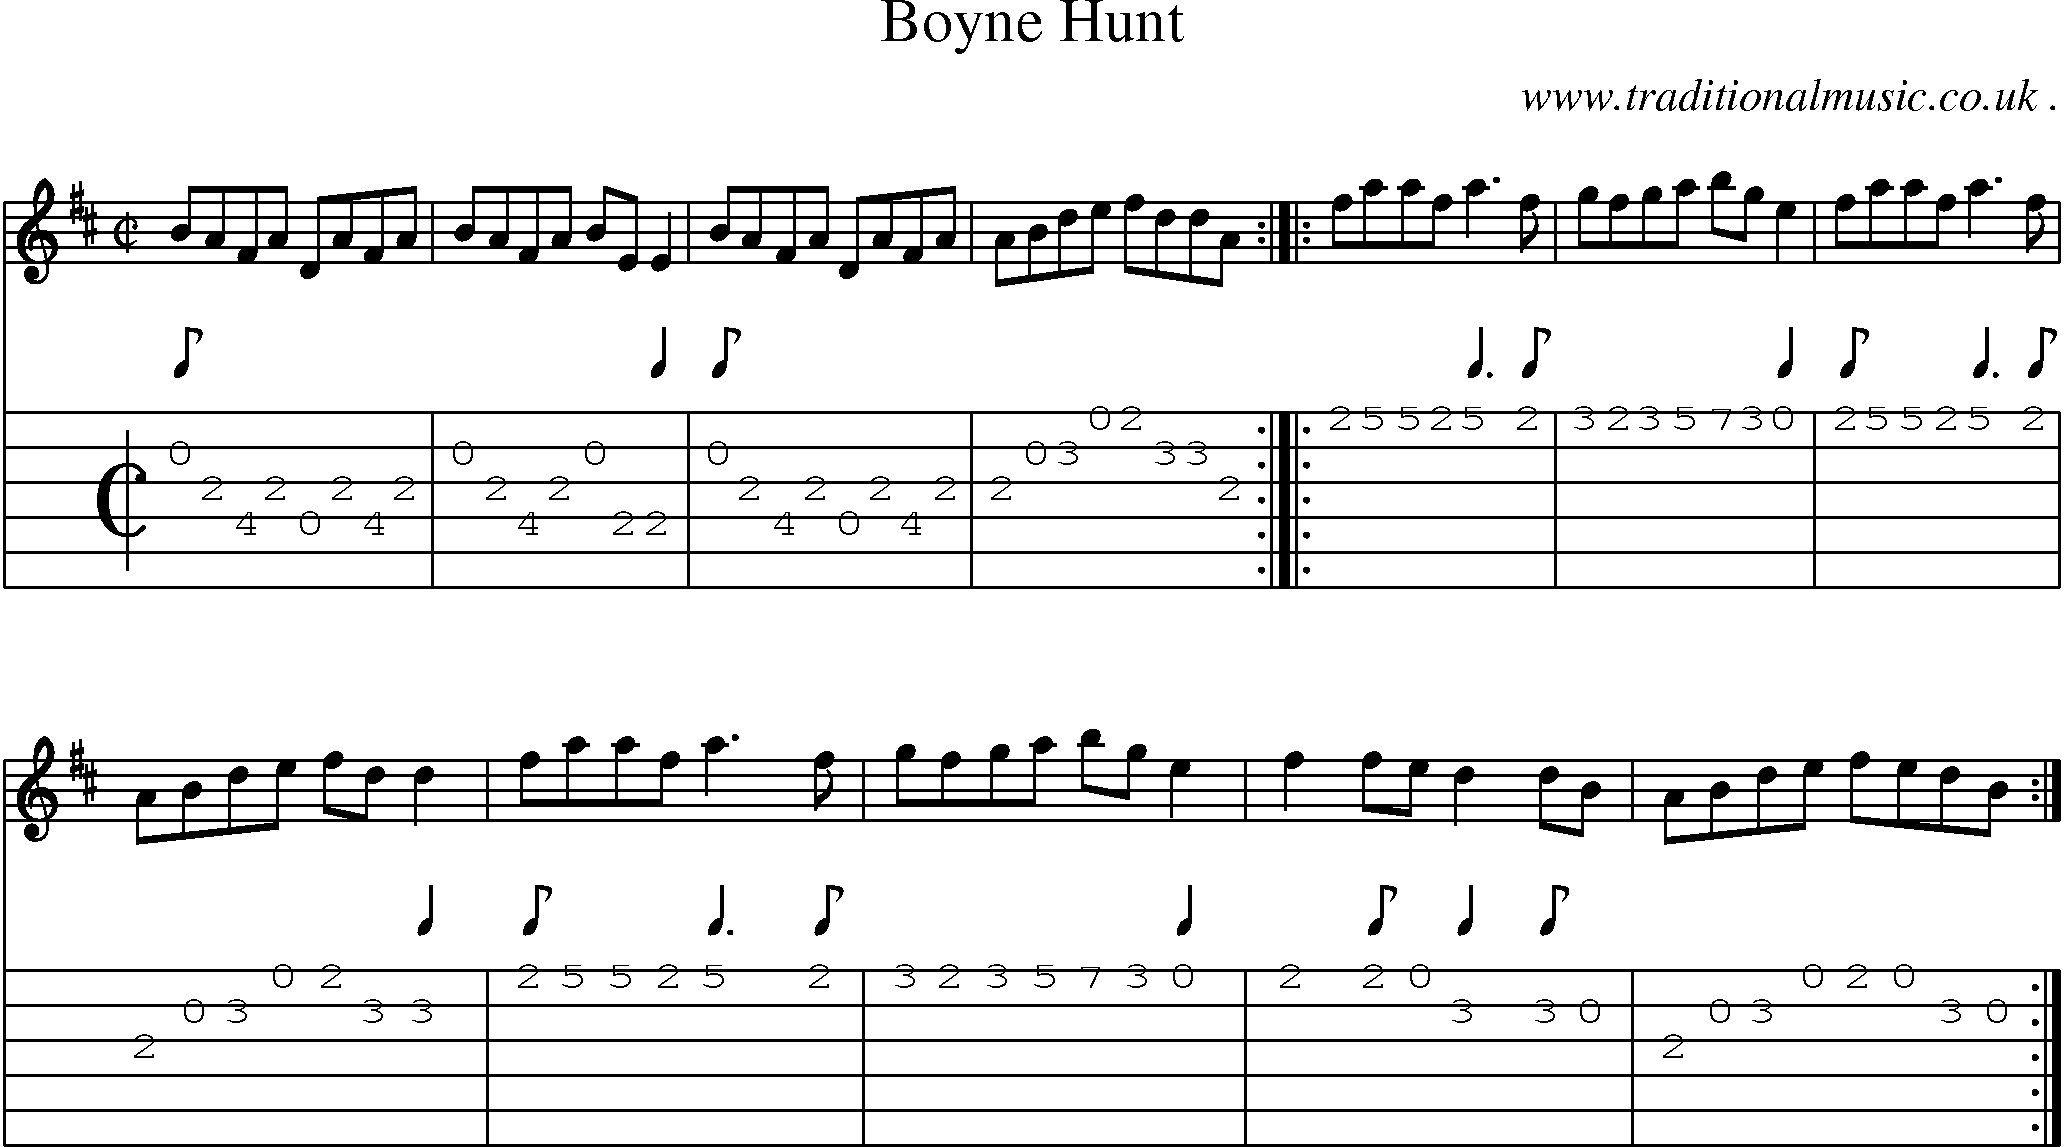 Sheet-Music and Guitar Tabs for Boyne Hunt